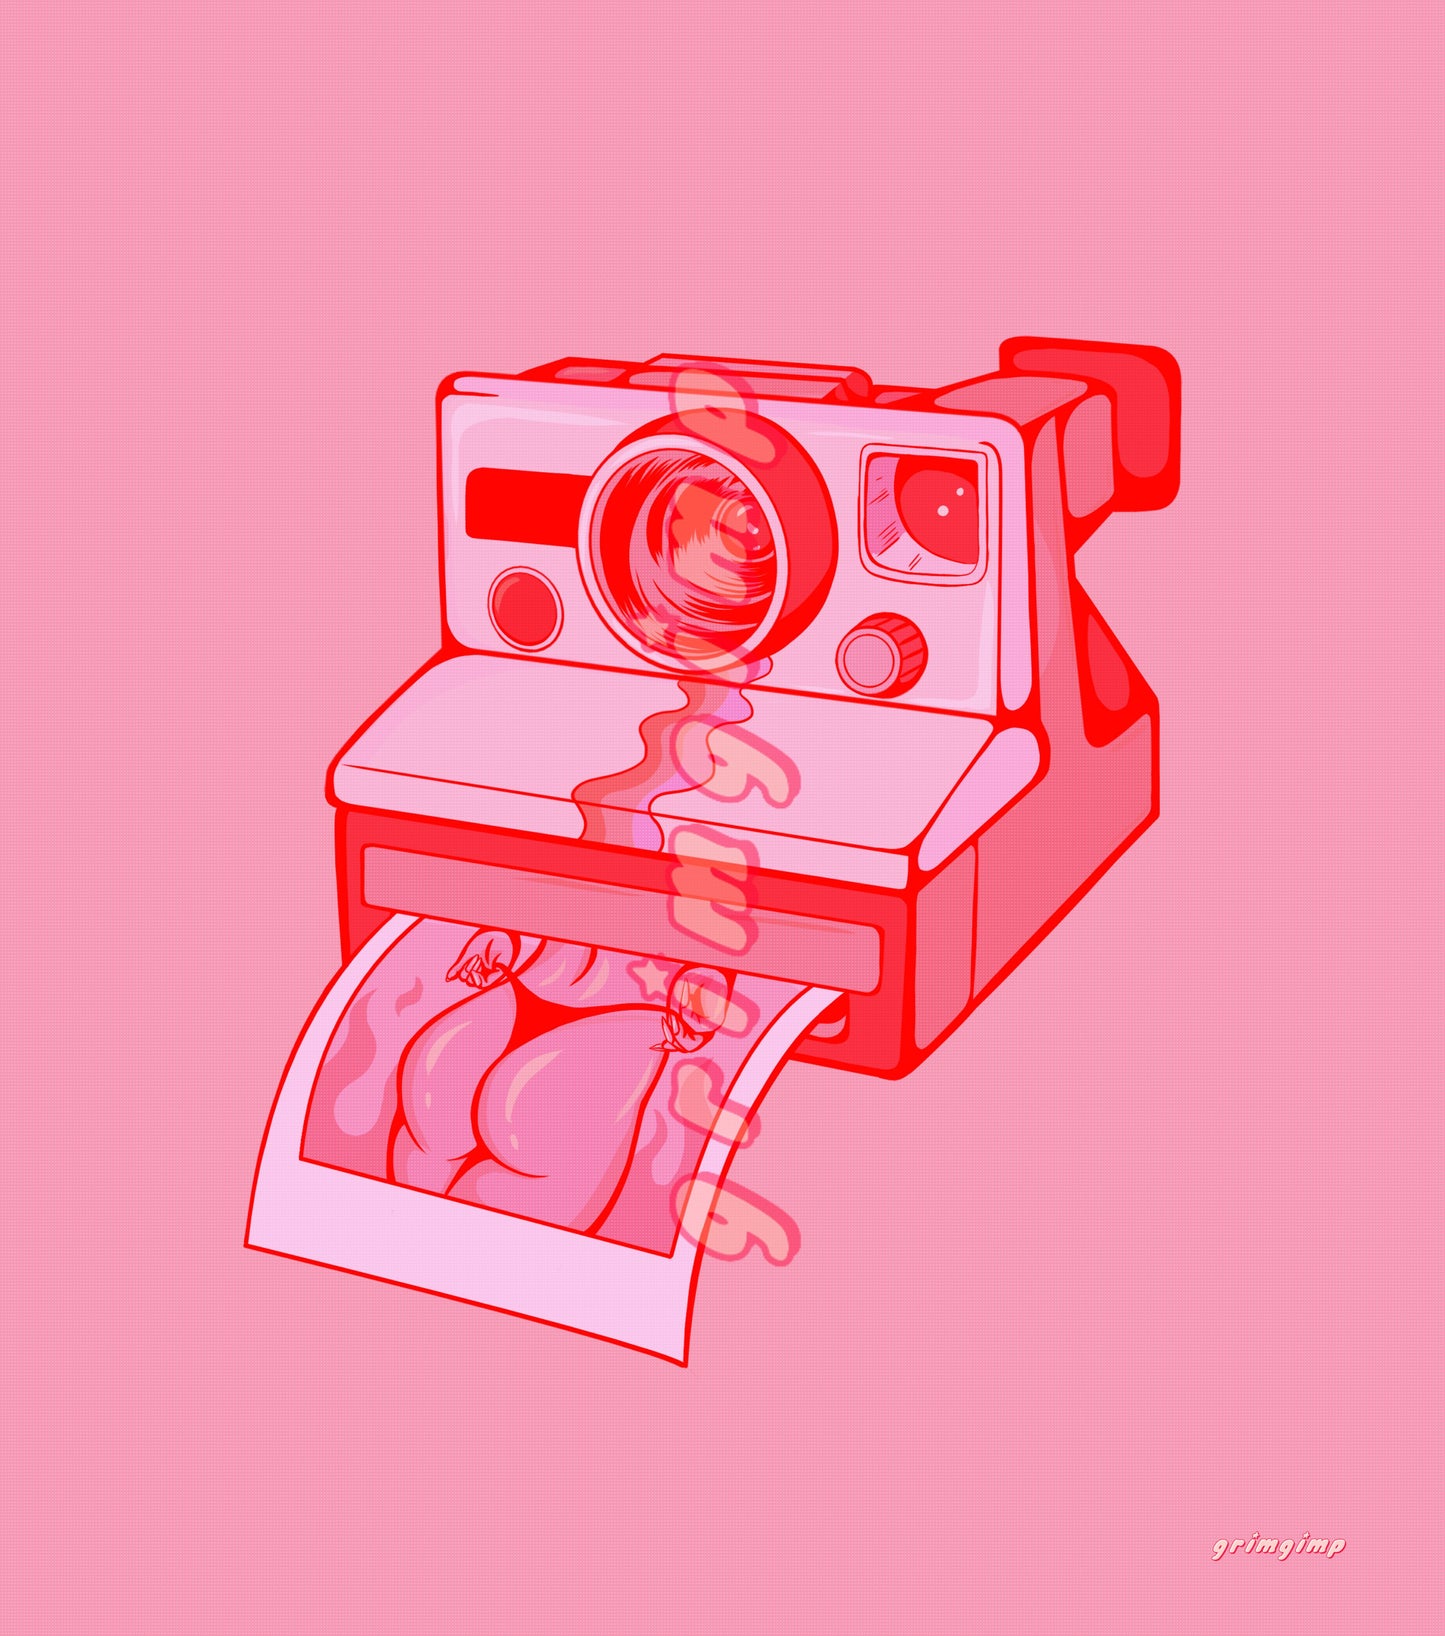 Hot Polaroid (pink) matte print